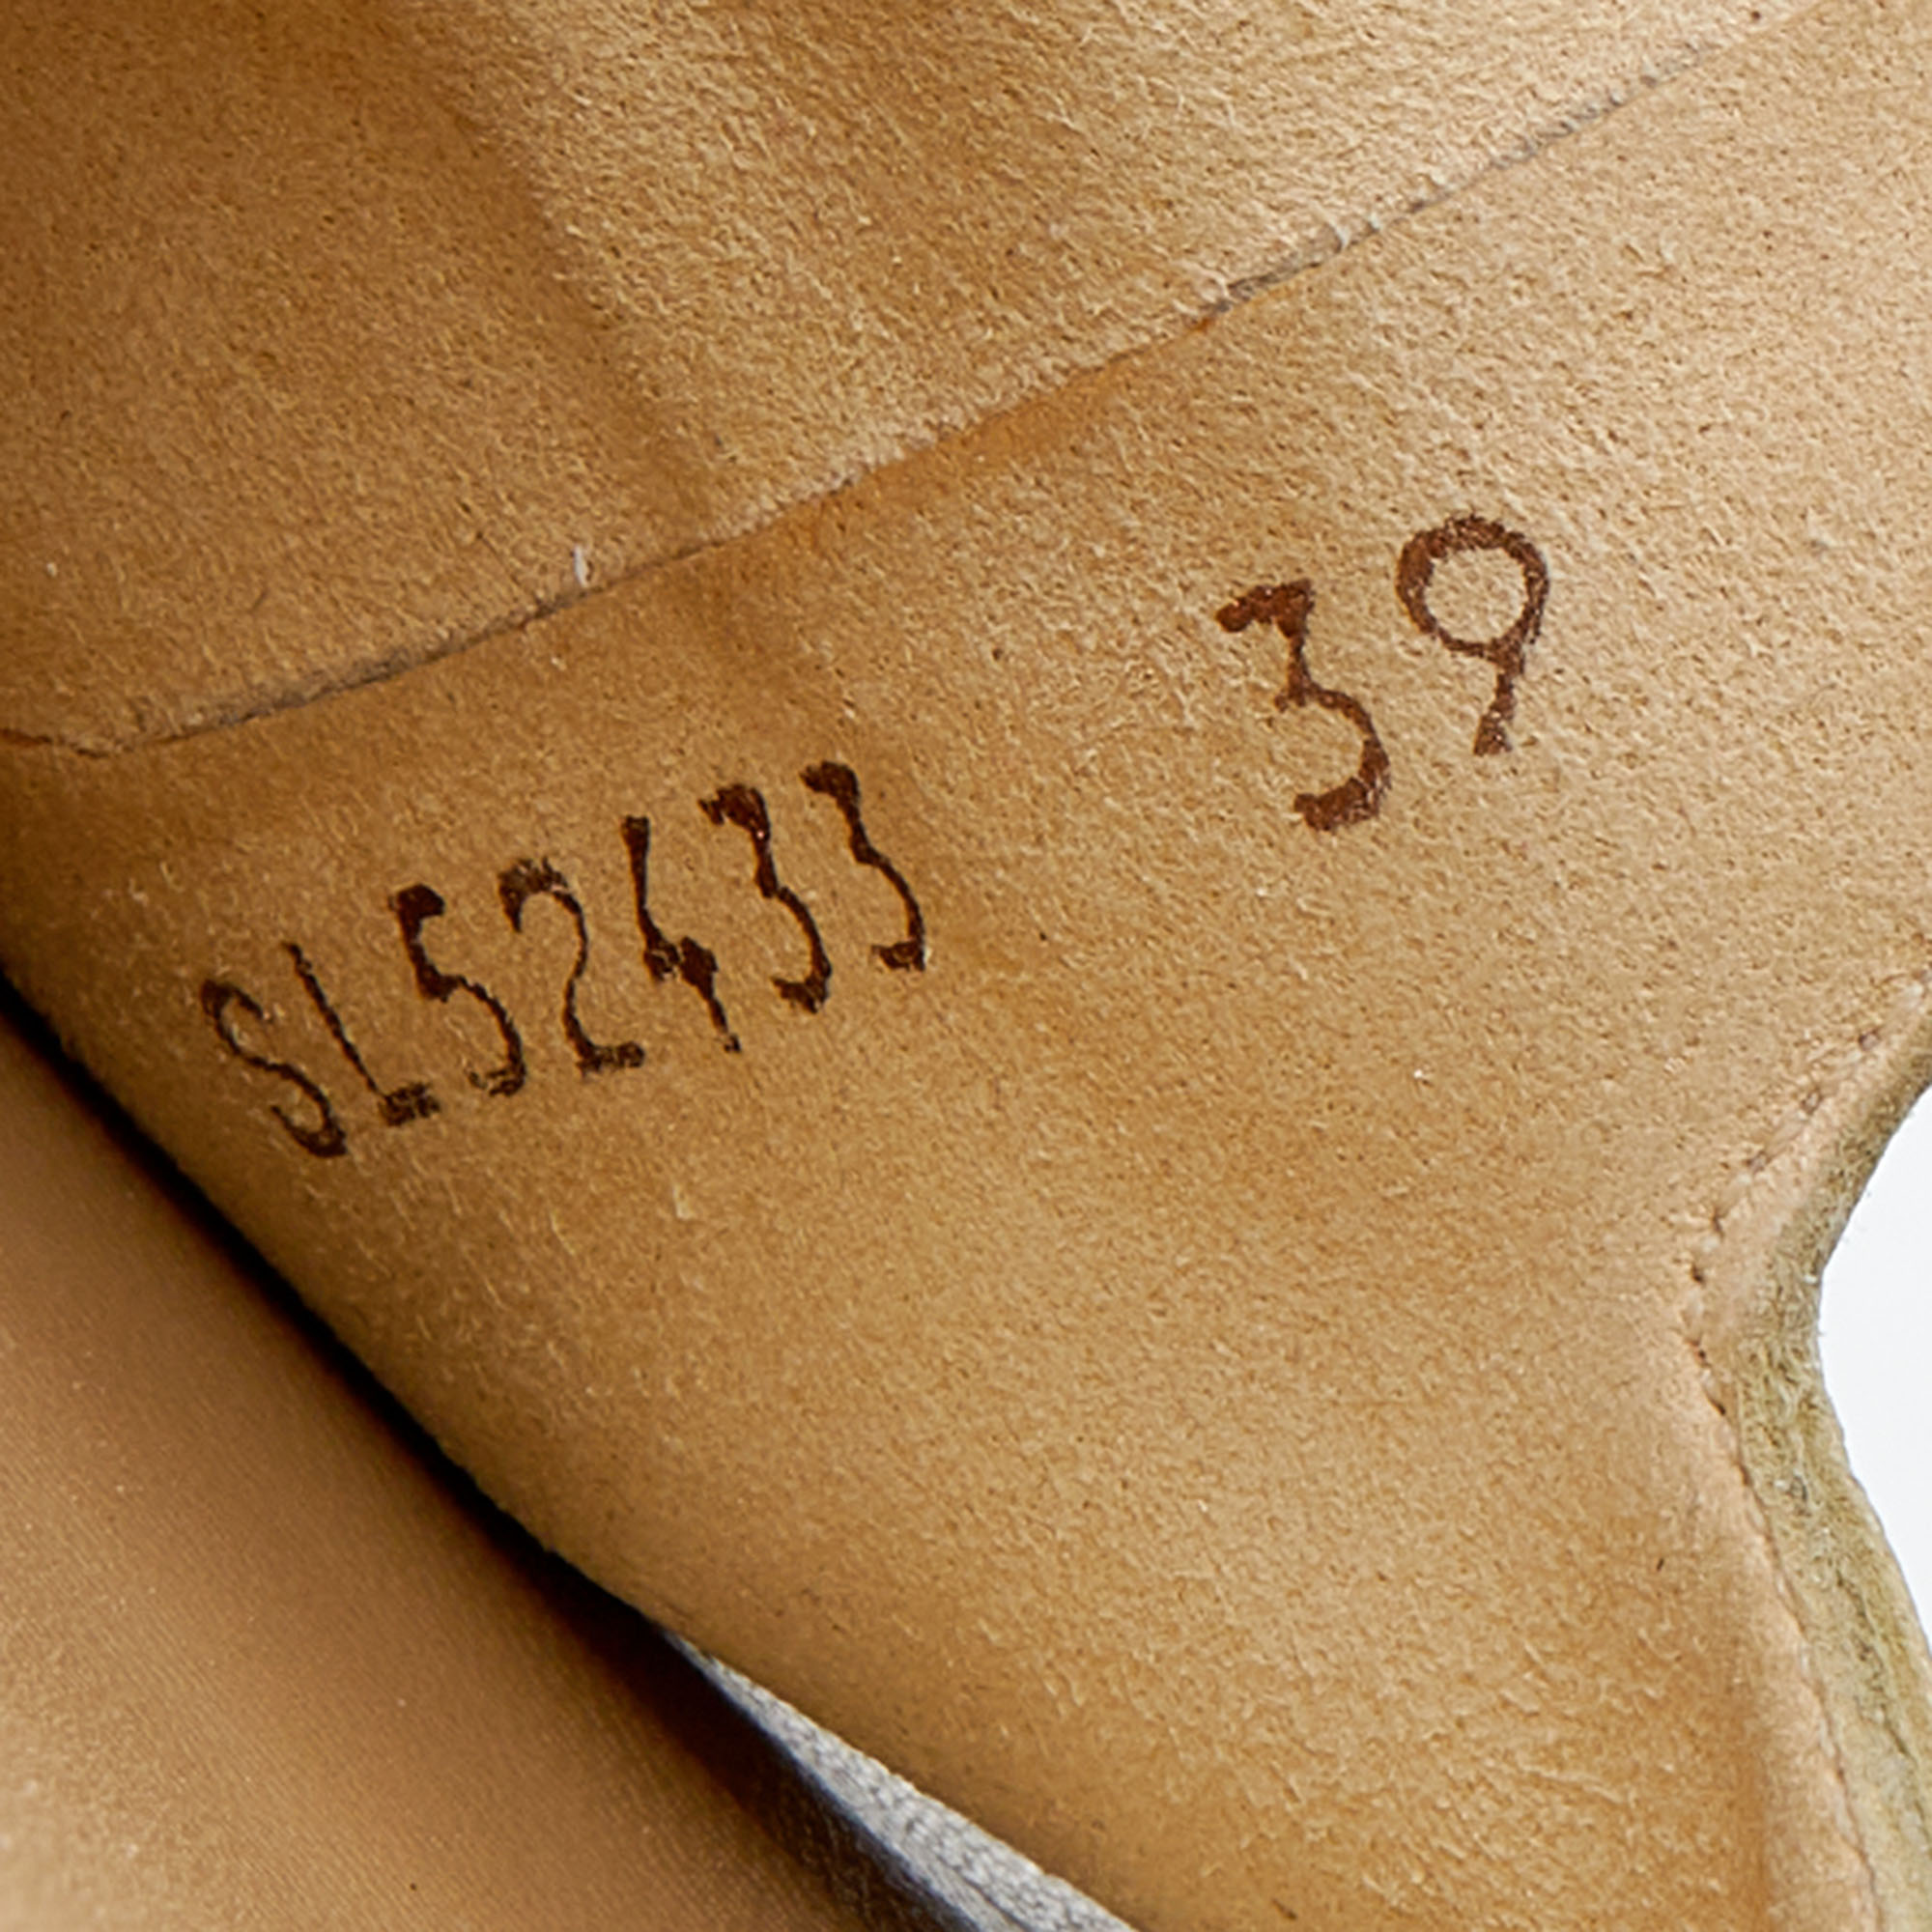 Stuart Weitzman Metallic Gold Leather Slide Sandals Size 39